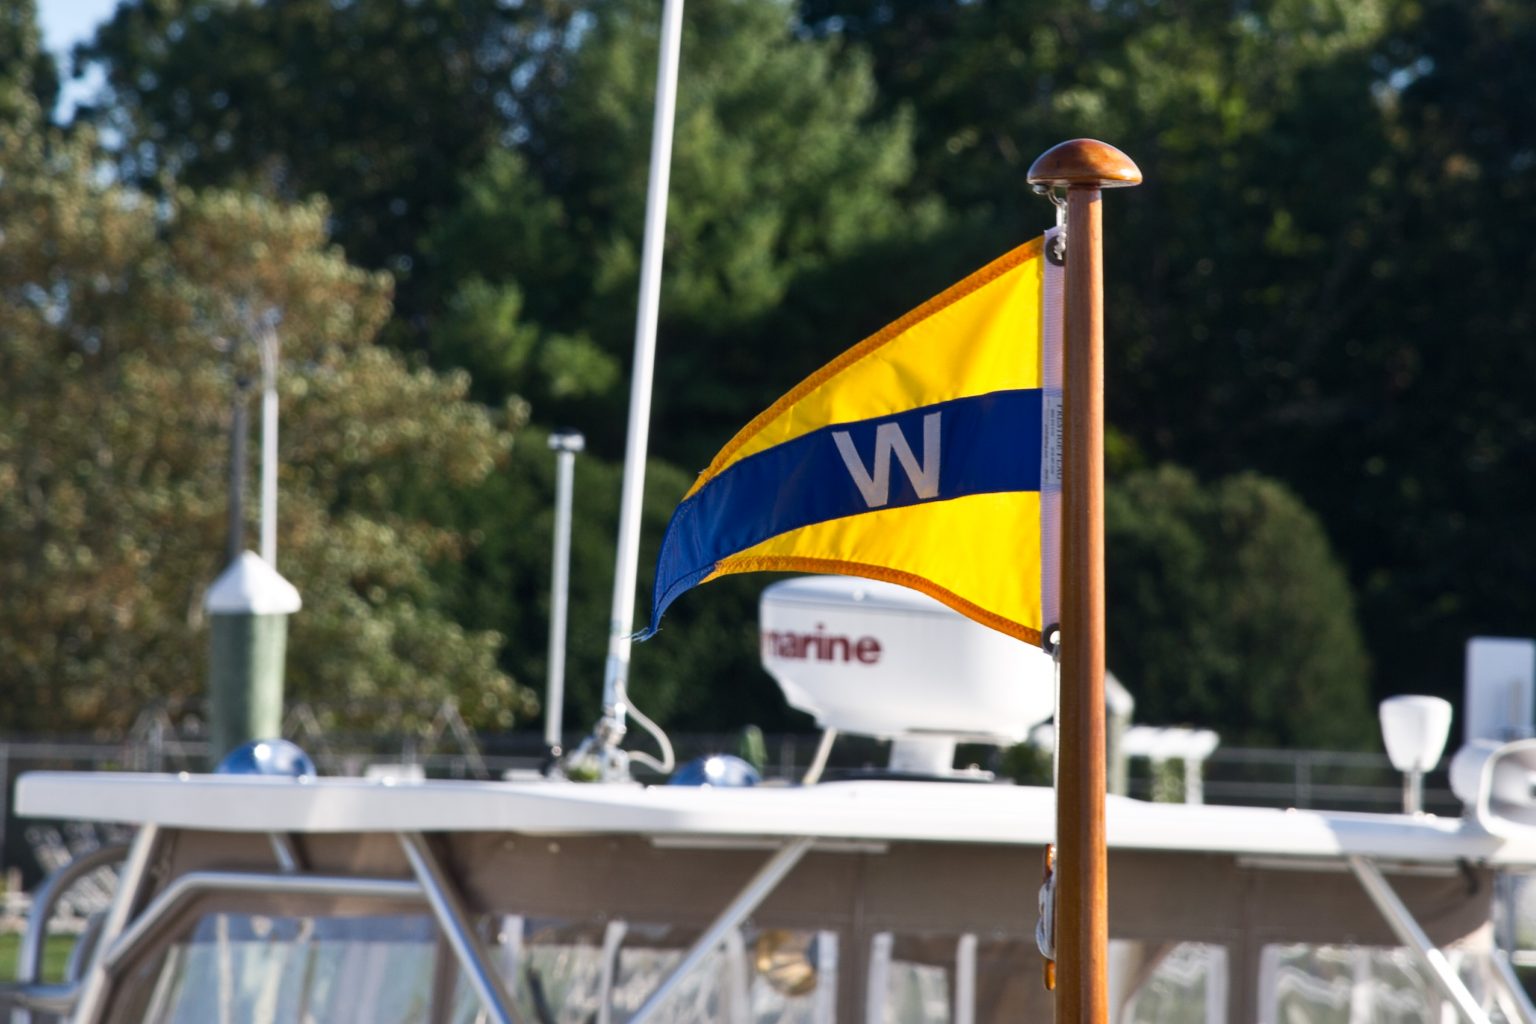 westerly yacht club membership prices